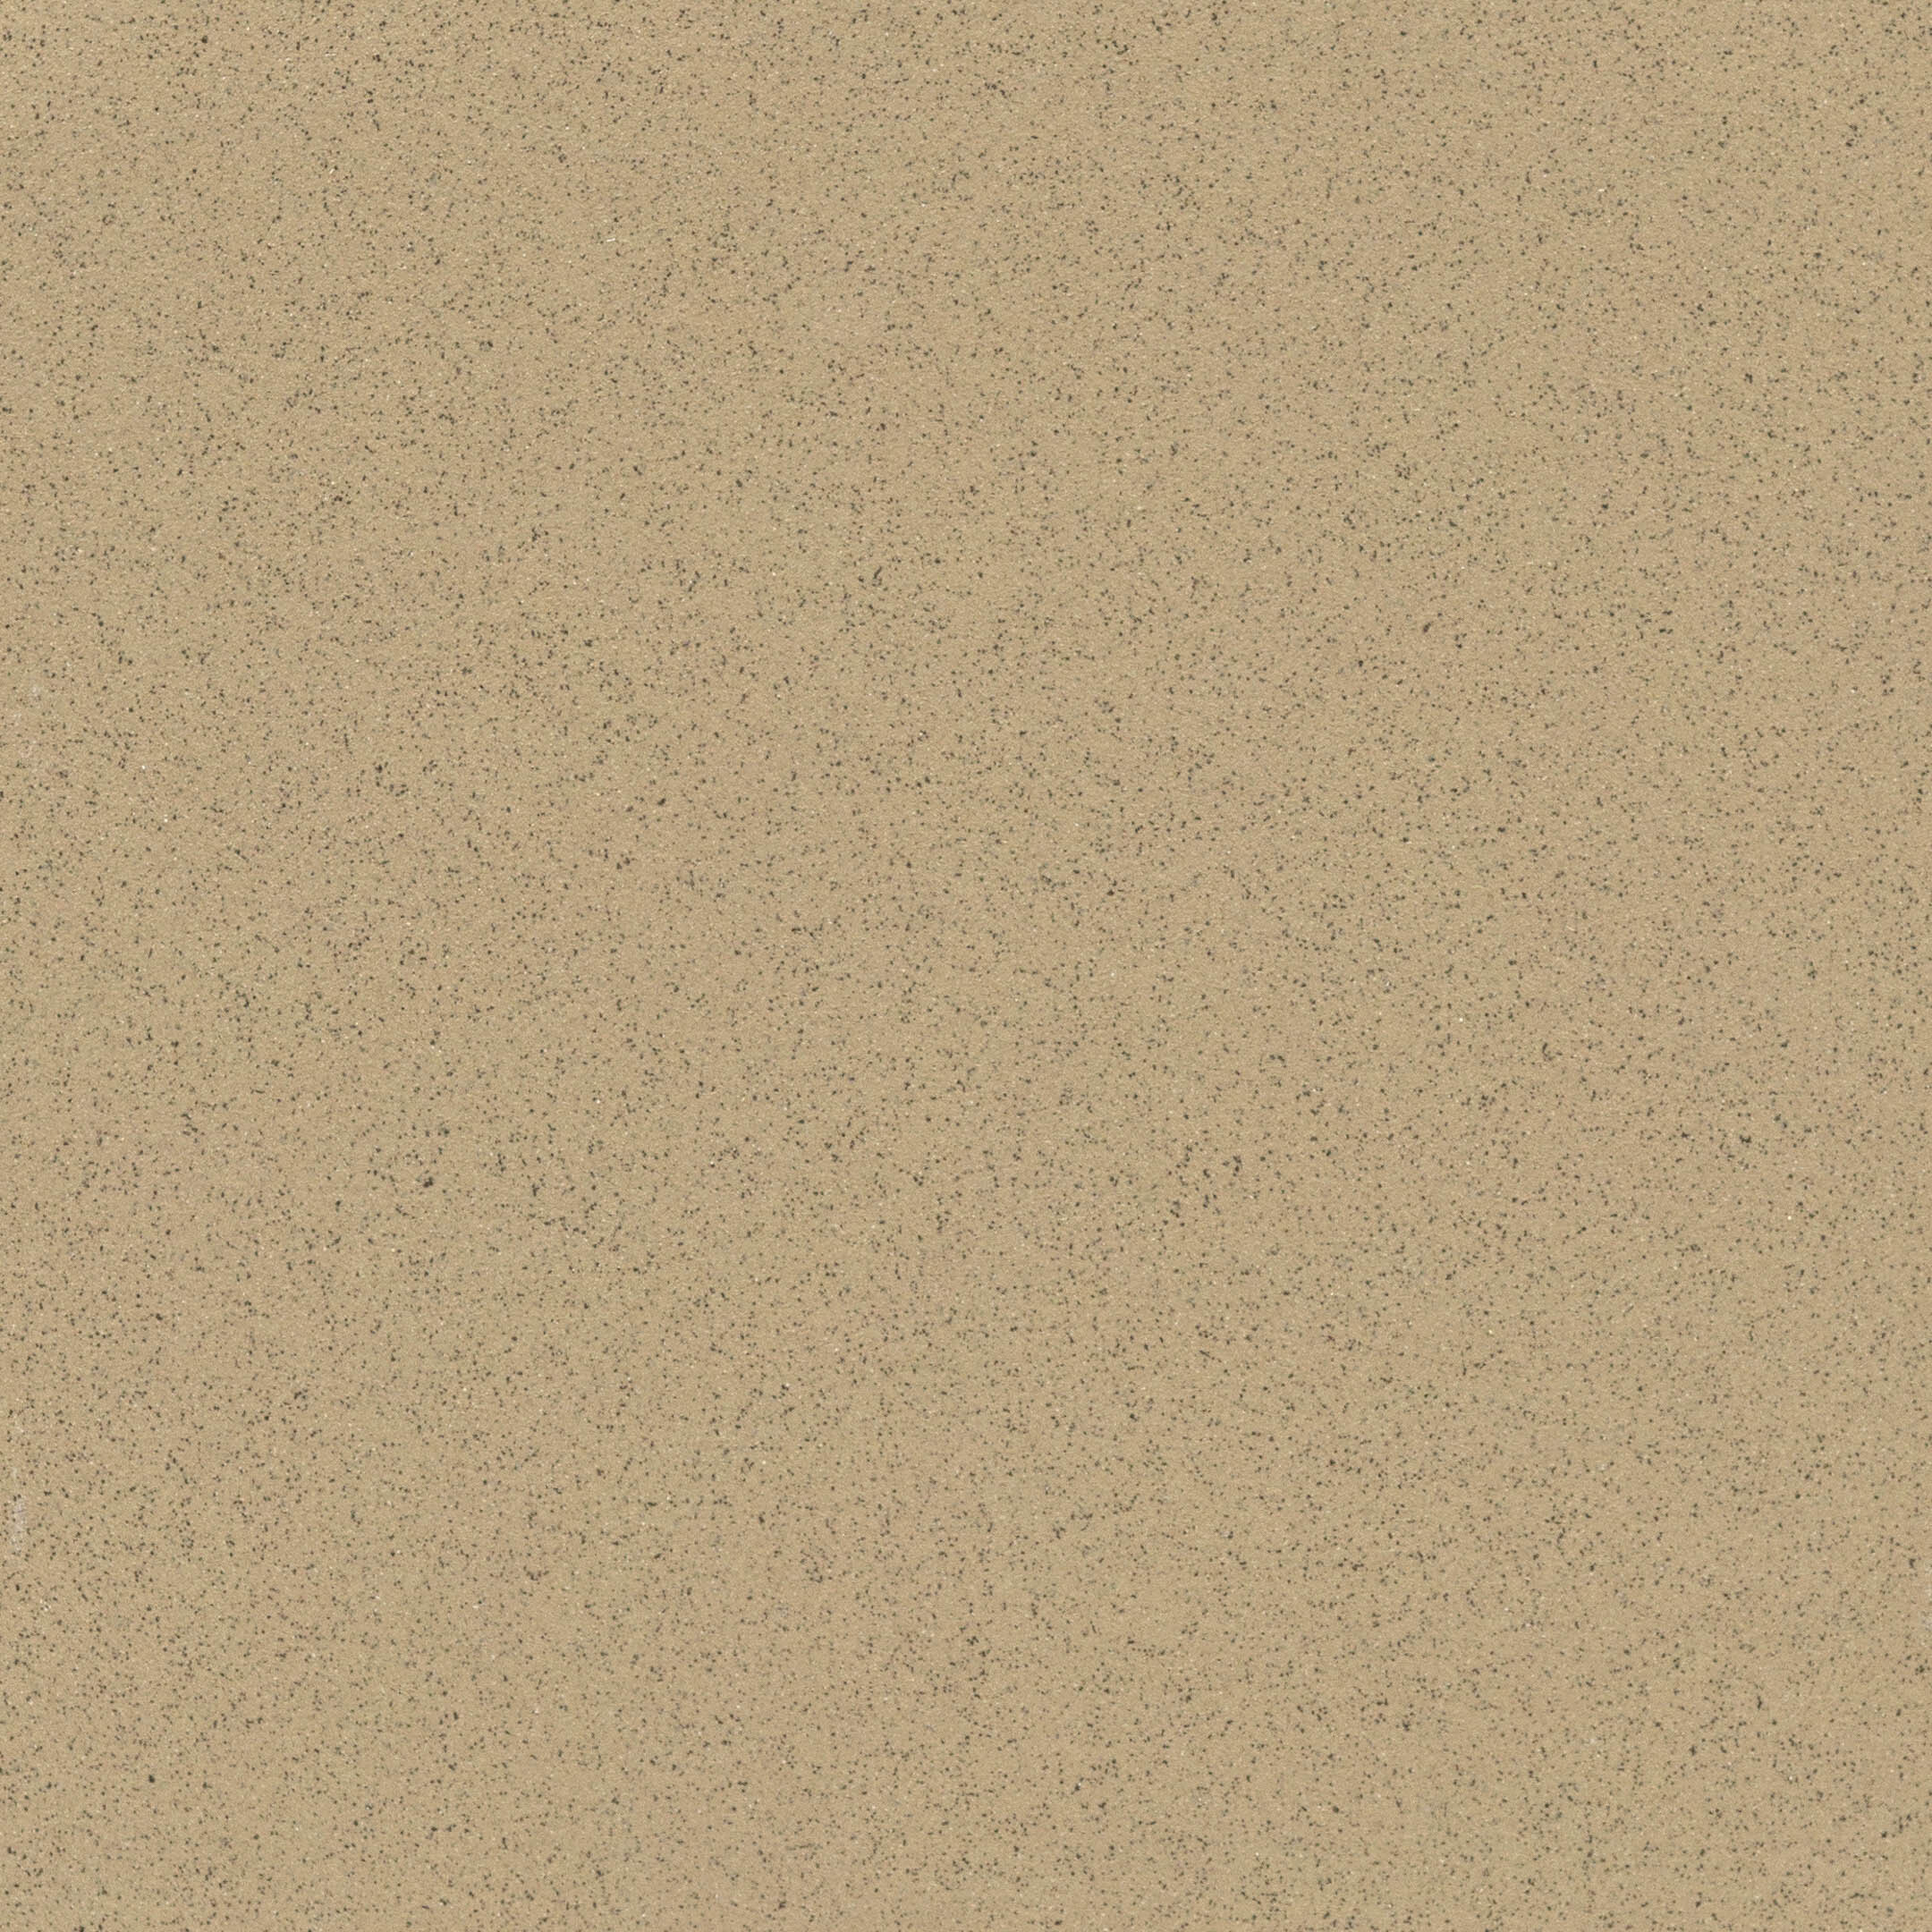 Керамогранит Quadro Decor Грес серый соль-перец 300х300х7 мм (17 шт.=1,53 кв.м) керамогранит quadro decor соль перец 30x30 см 1 44 м2 неполированный цвет светло серый